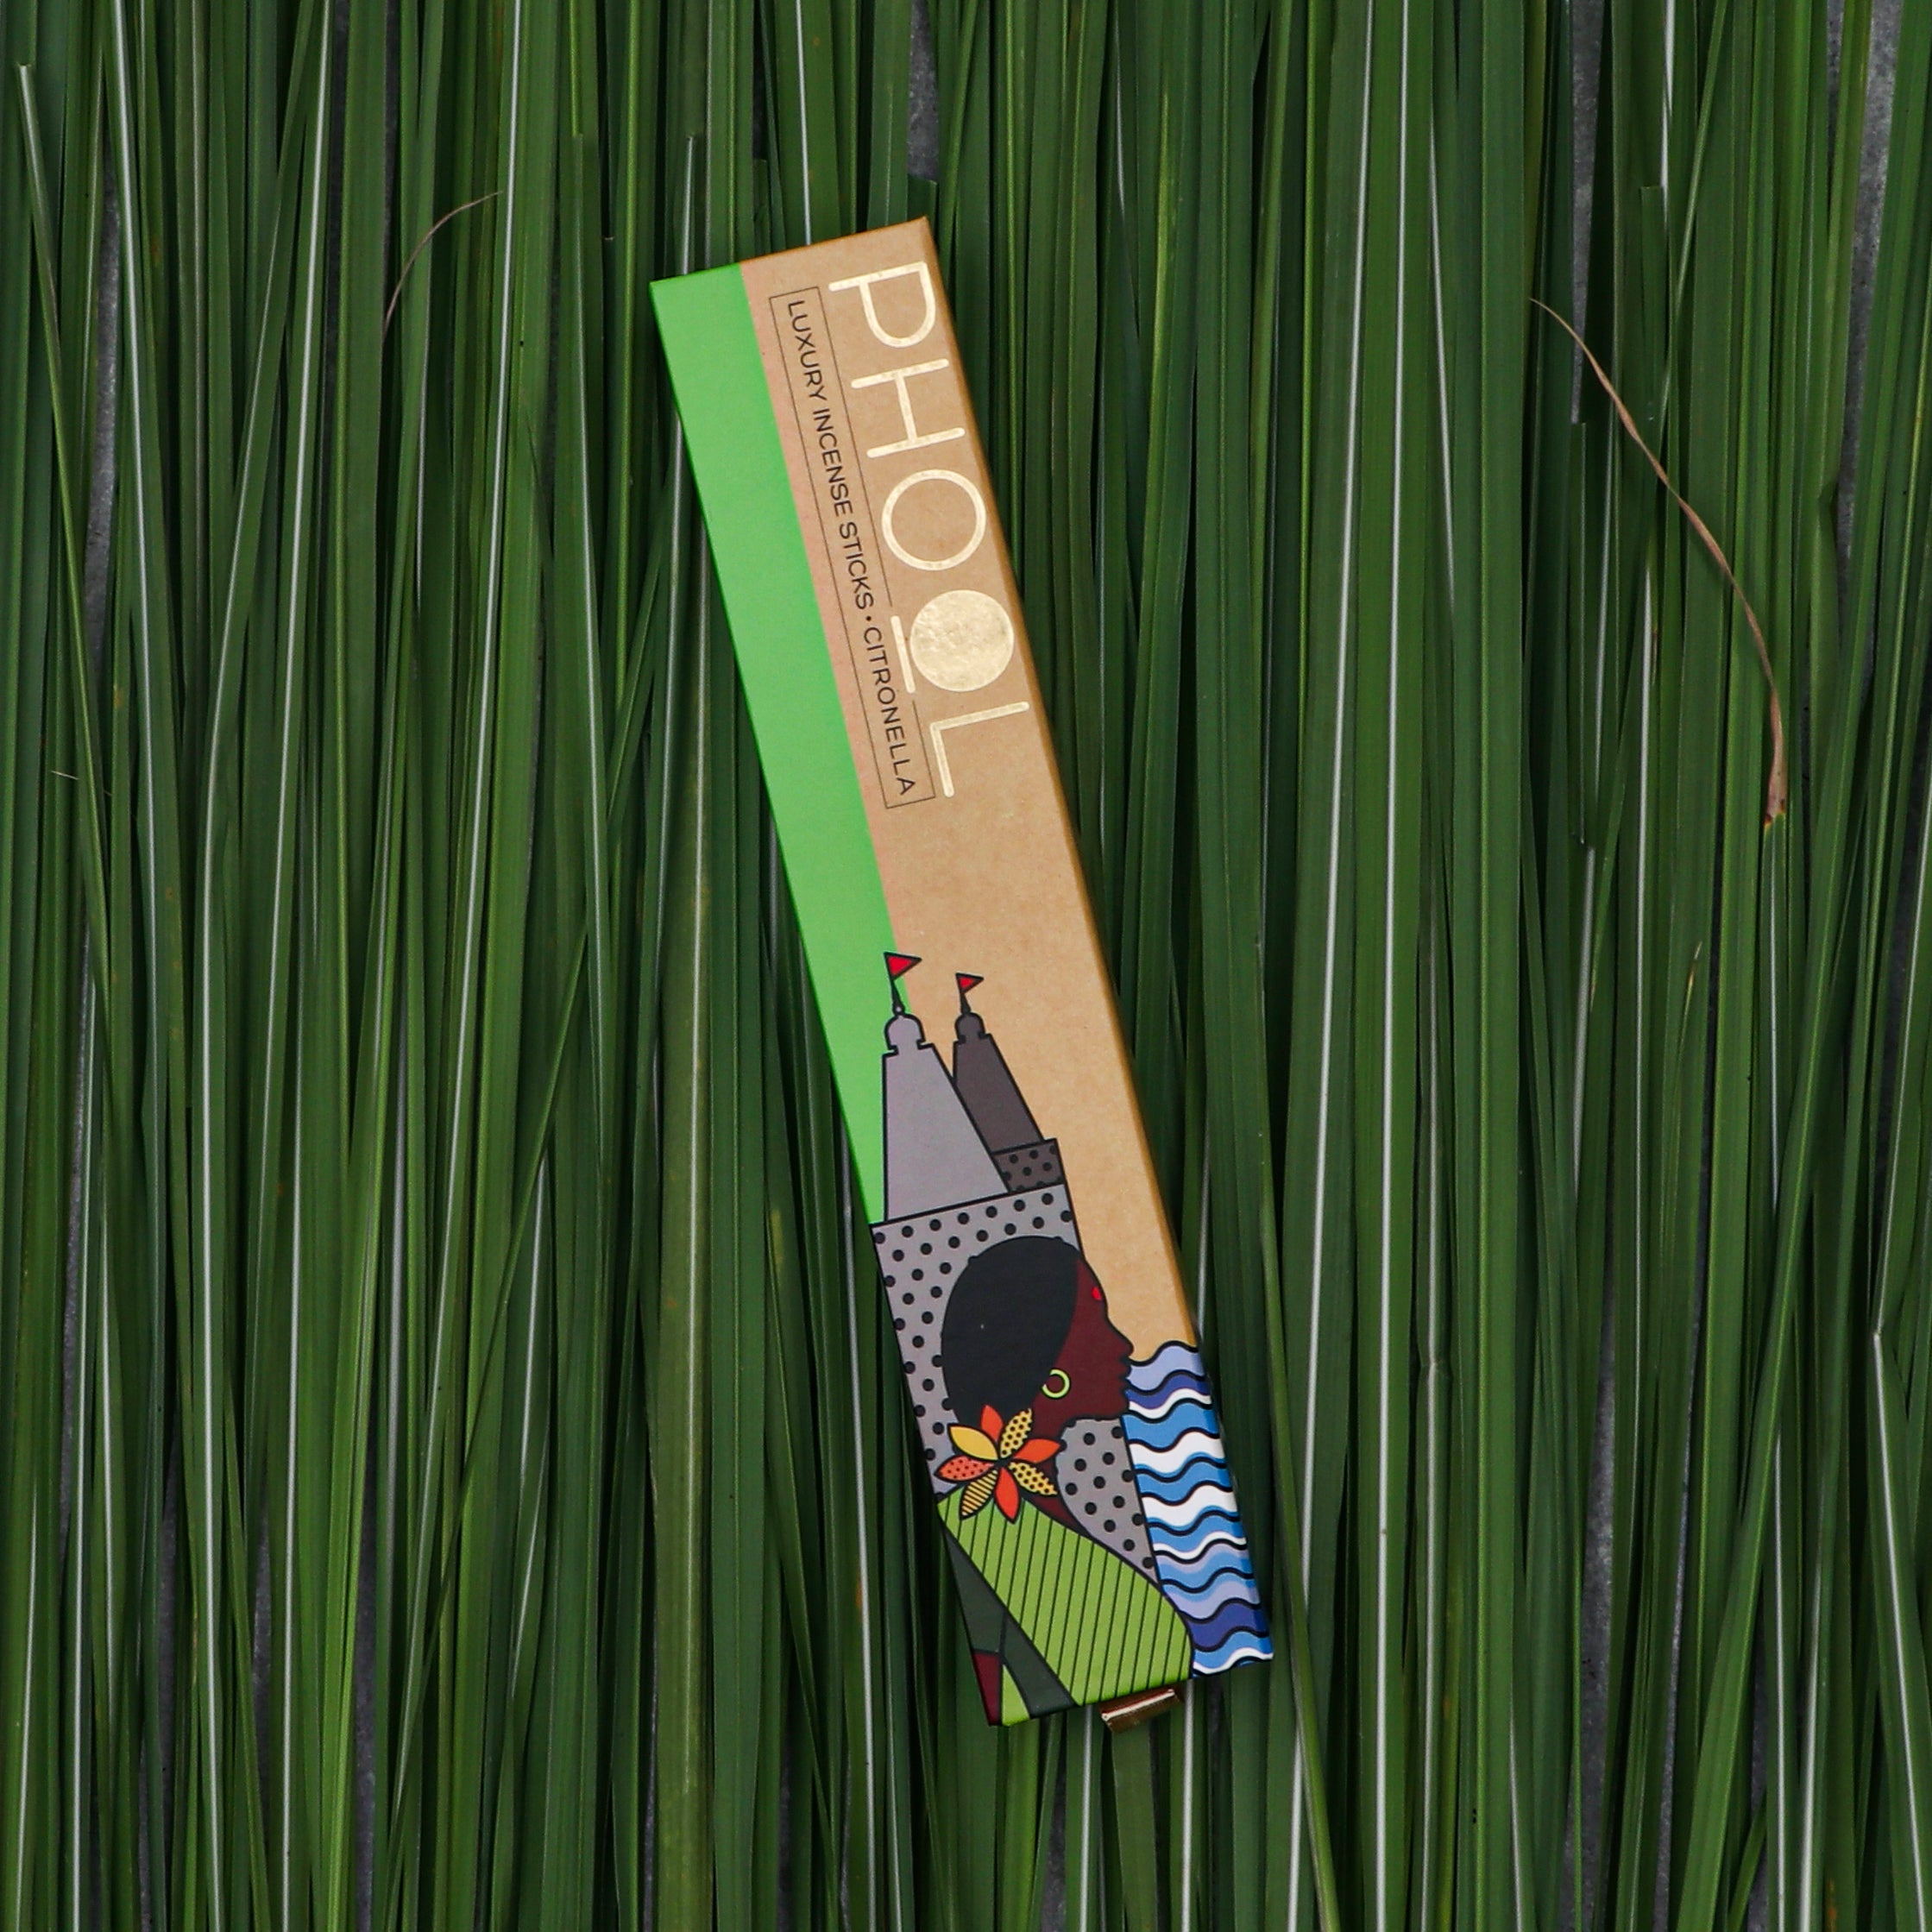 Phool Natural Incense Sticks - Citronella